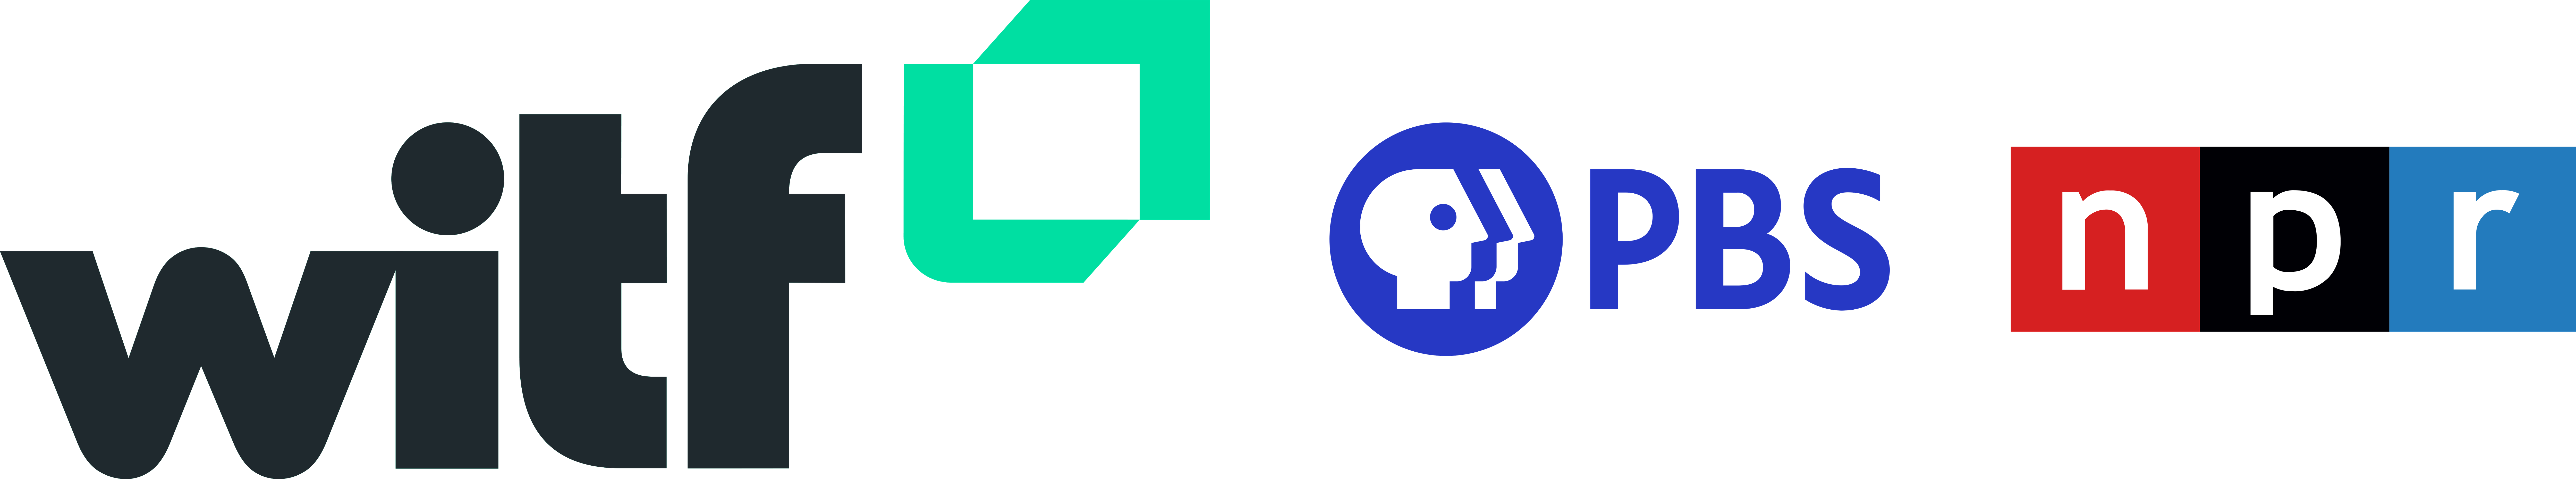 WITF | PBS | NPR logos